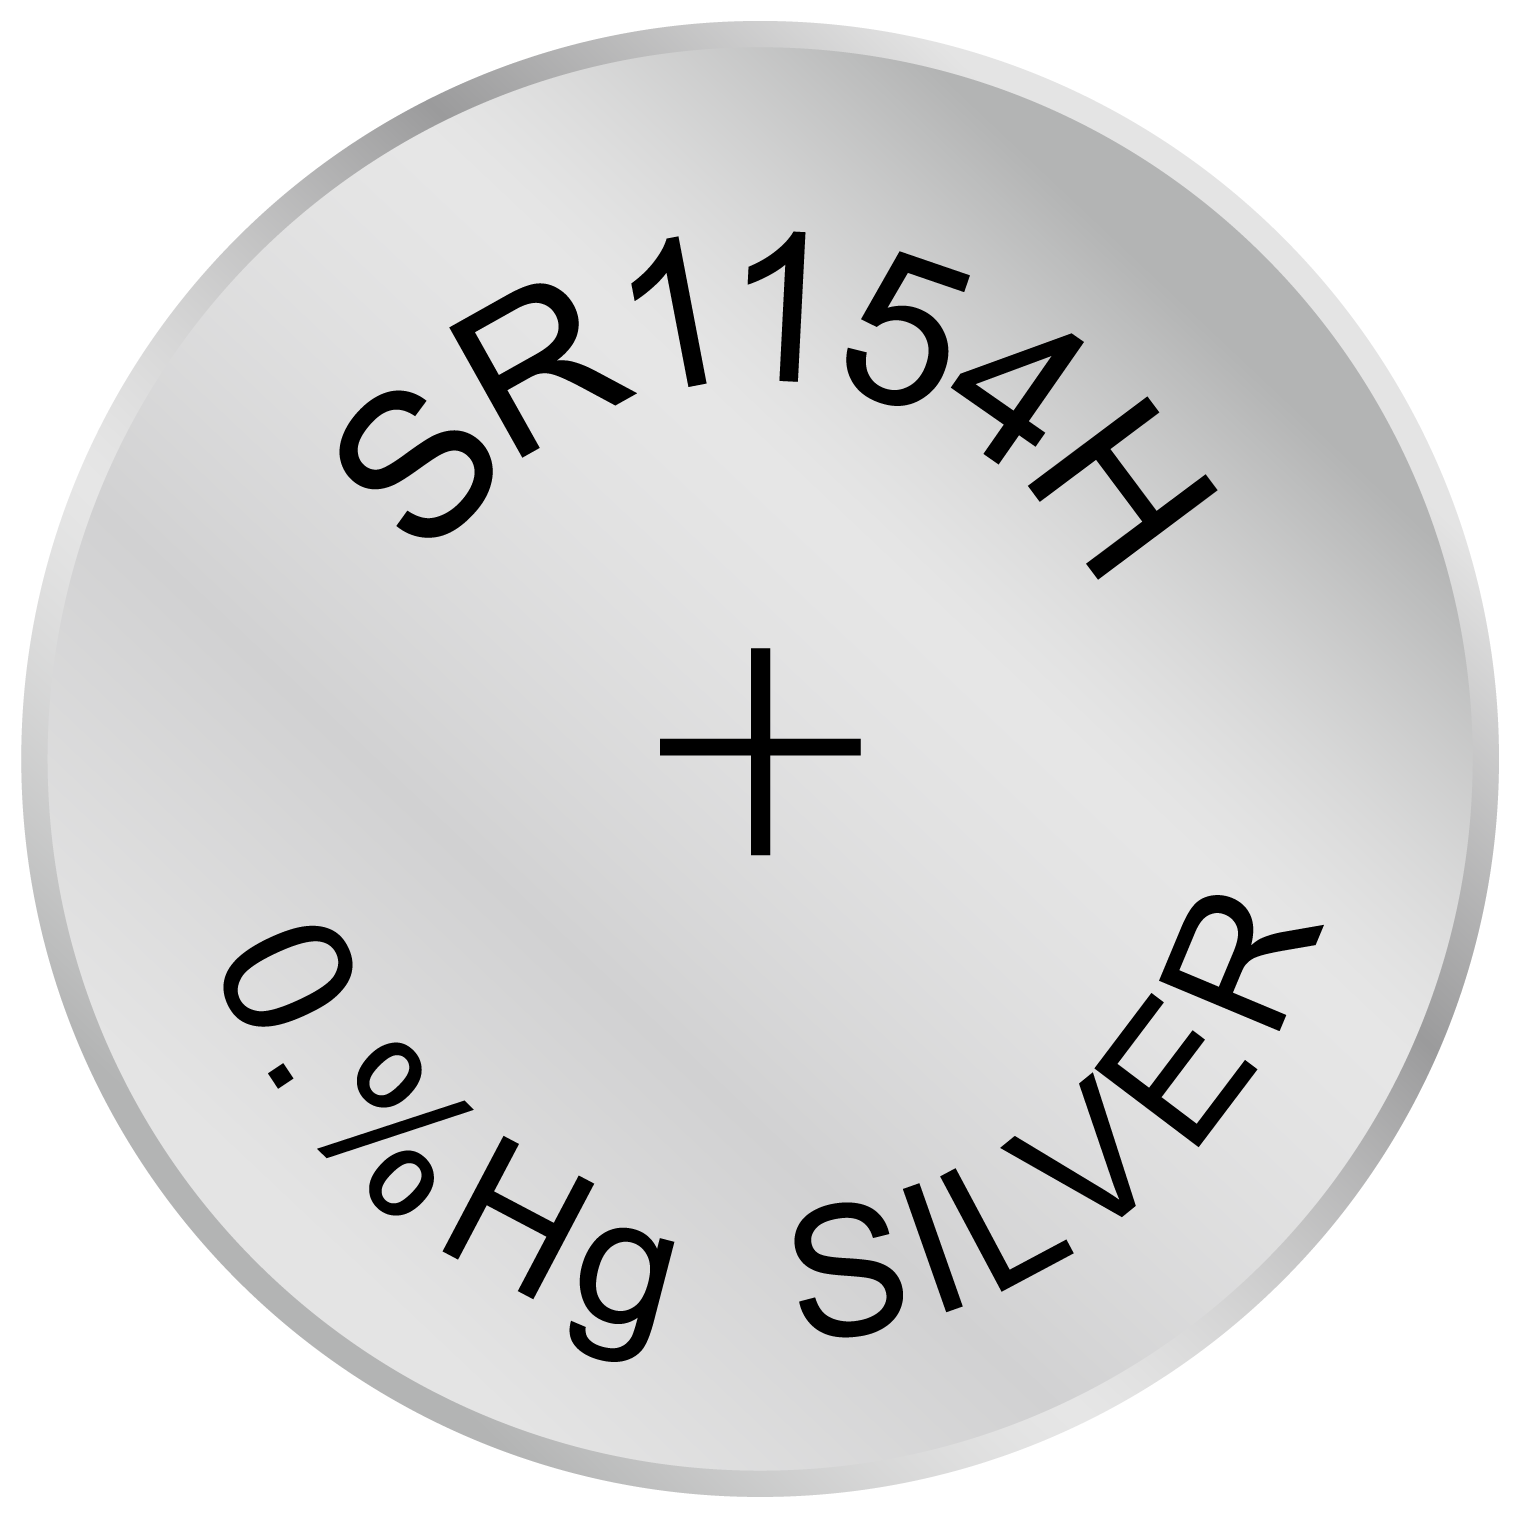 SR silver oxide series